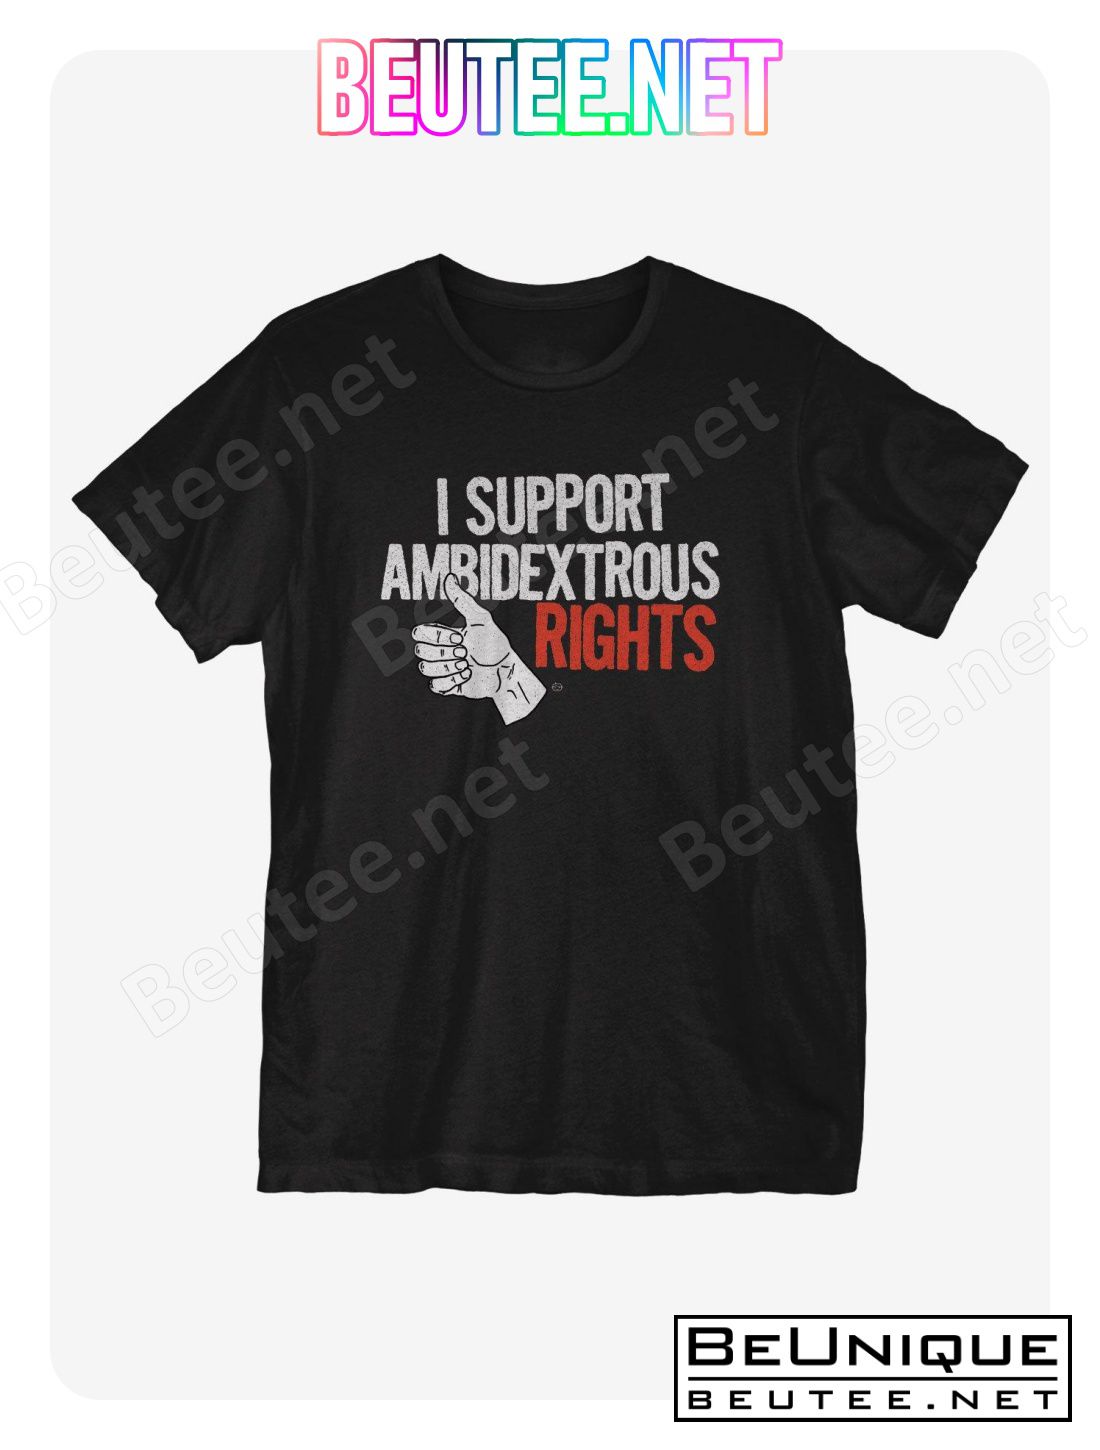 Ambidextrous Rights T-Shirt